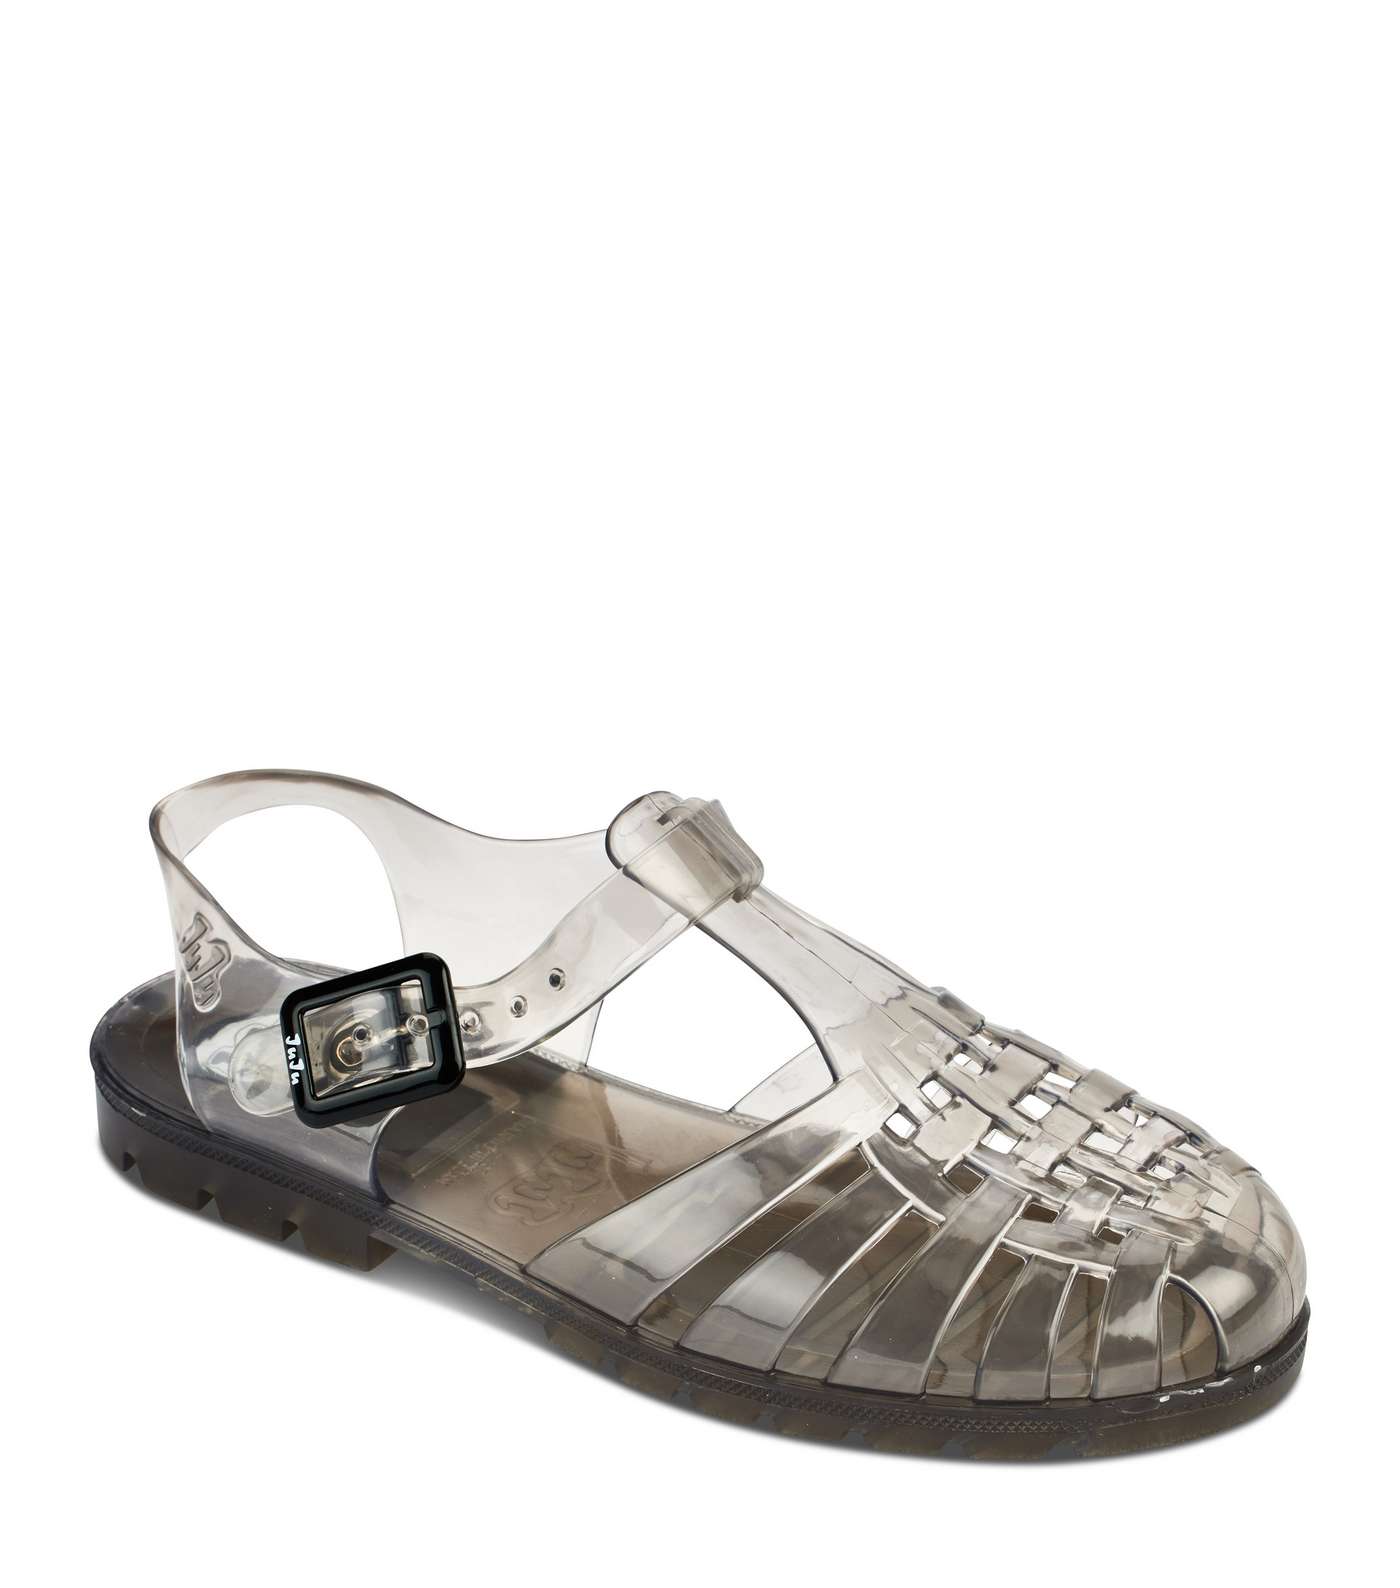 JUJU Dark Grey Jelly Sandals Image 2